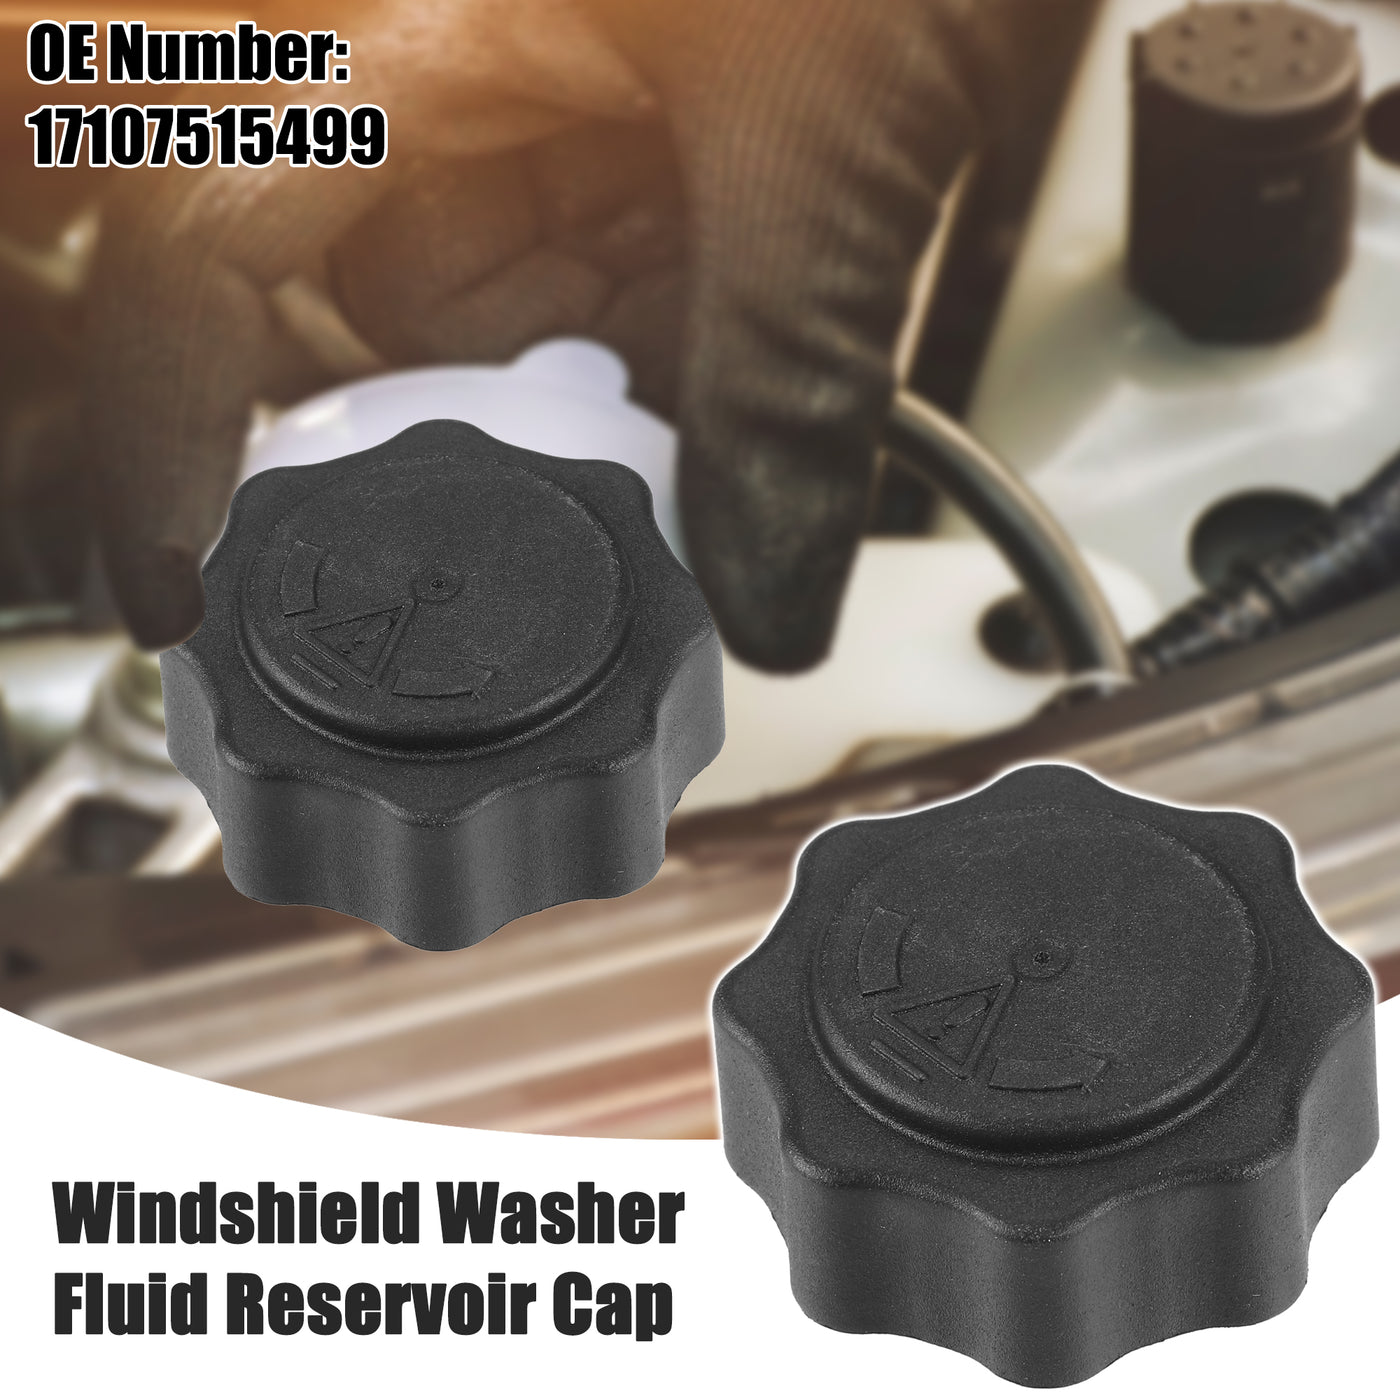 ACROPIX Windshield Washer Fluid Reservoir Bottle Cap Cover Fit for Mini Cooper S 1.6L L4 - Gas 2002-2008 No.17107515499 - Pack of 1 Black